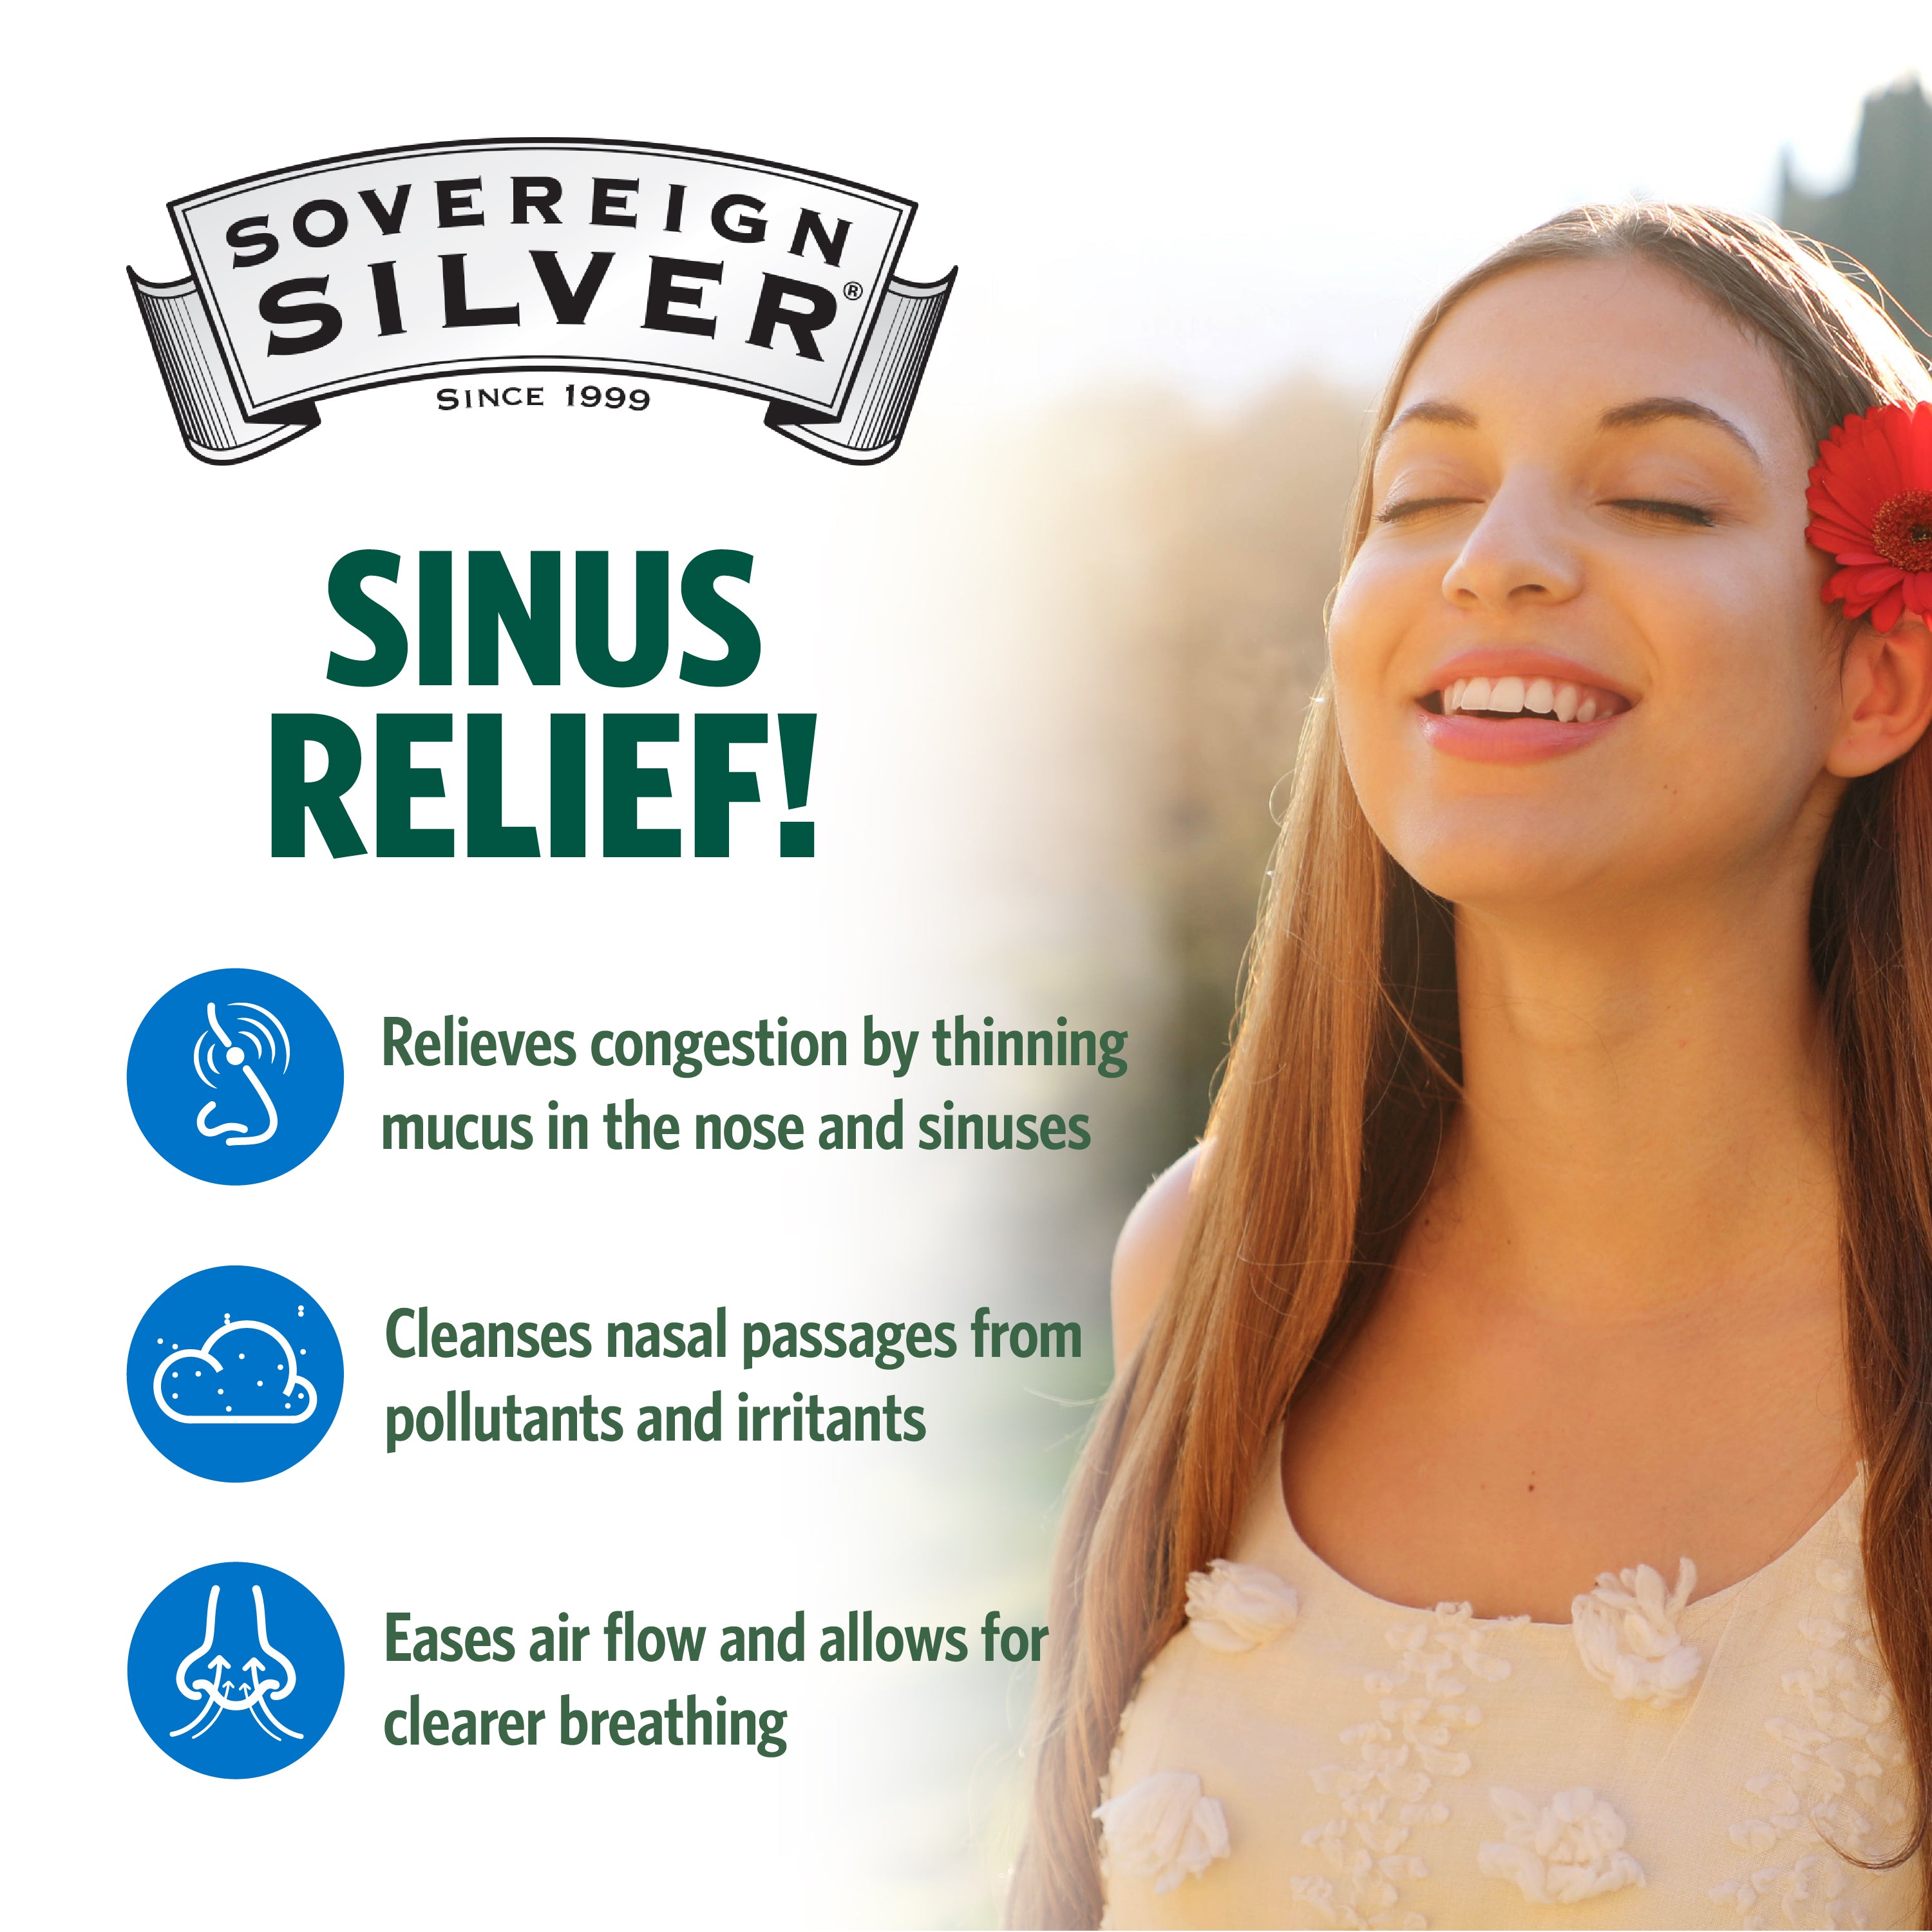 Bio-Active Silver Hydrosol - Natural Nasal Spray